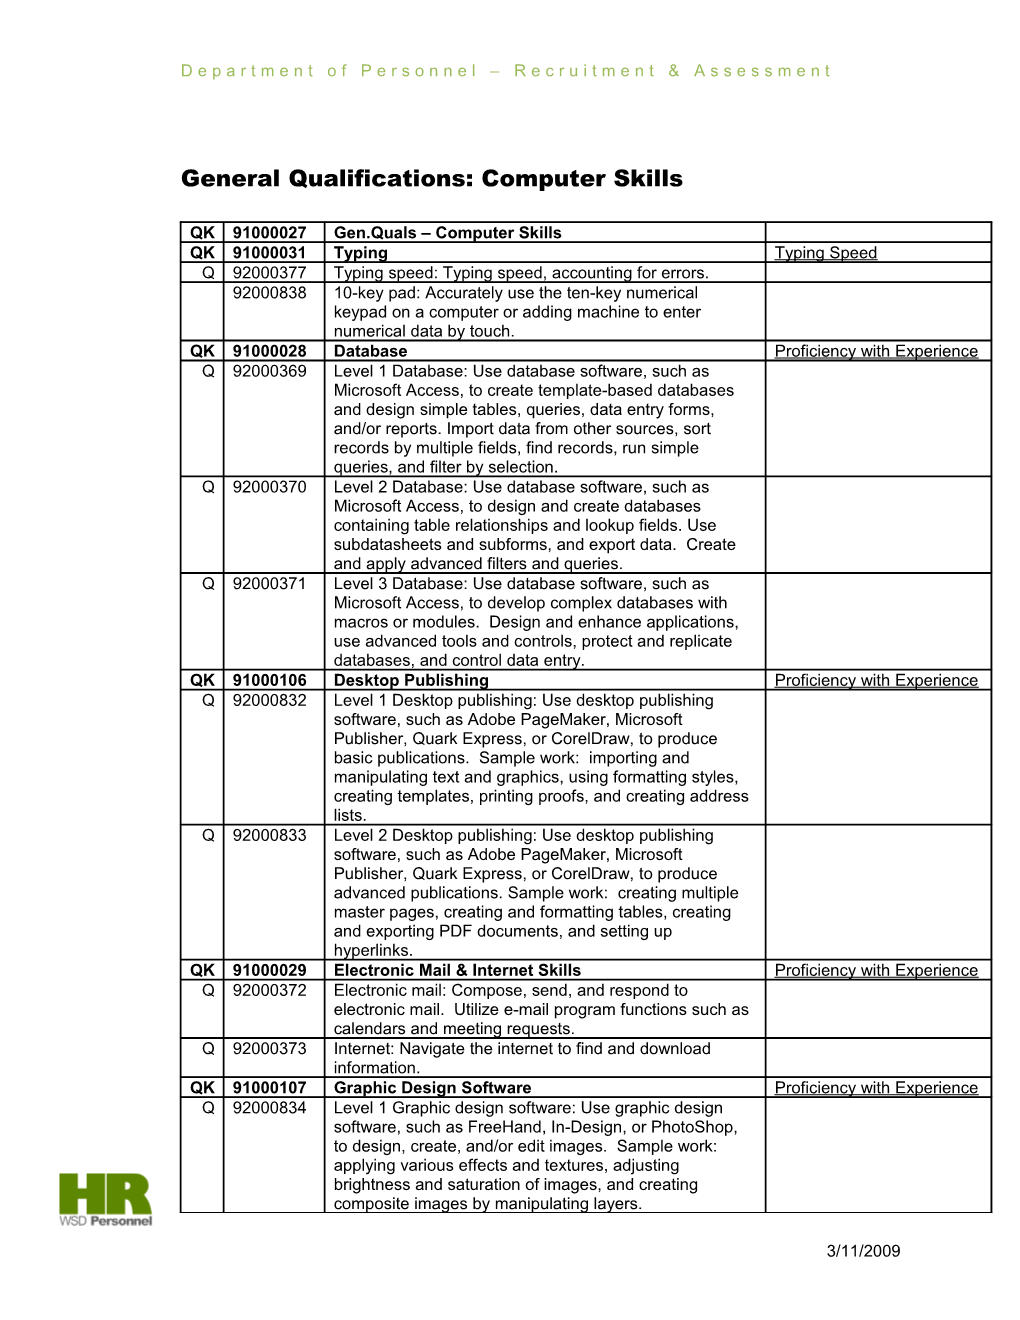 Qualifications, Computer Skills